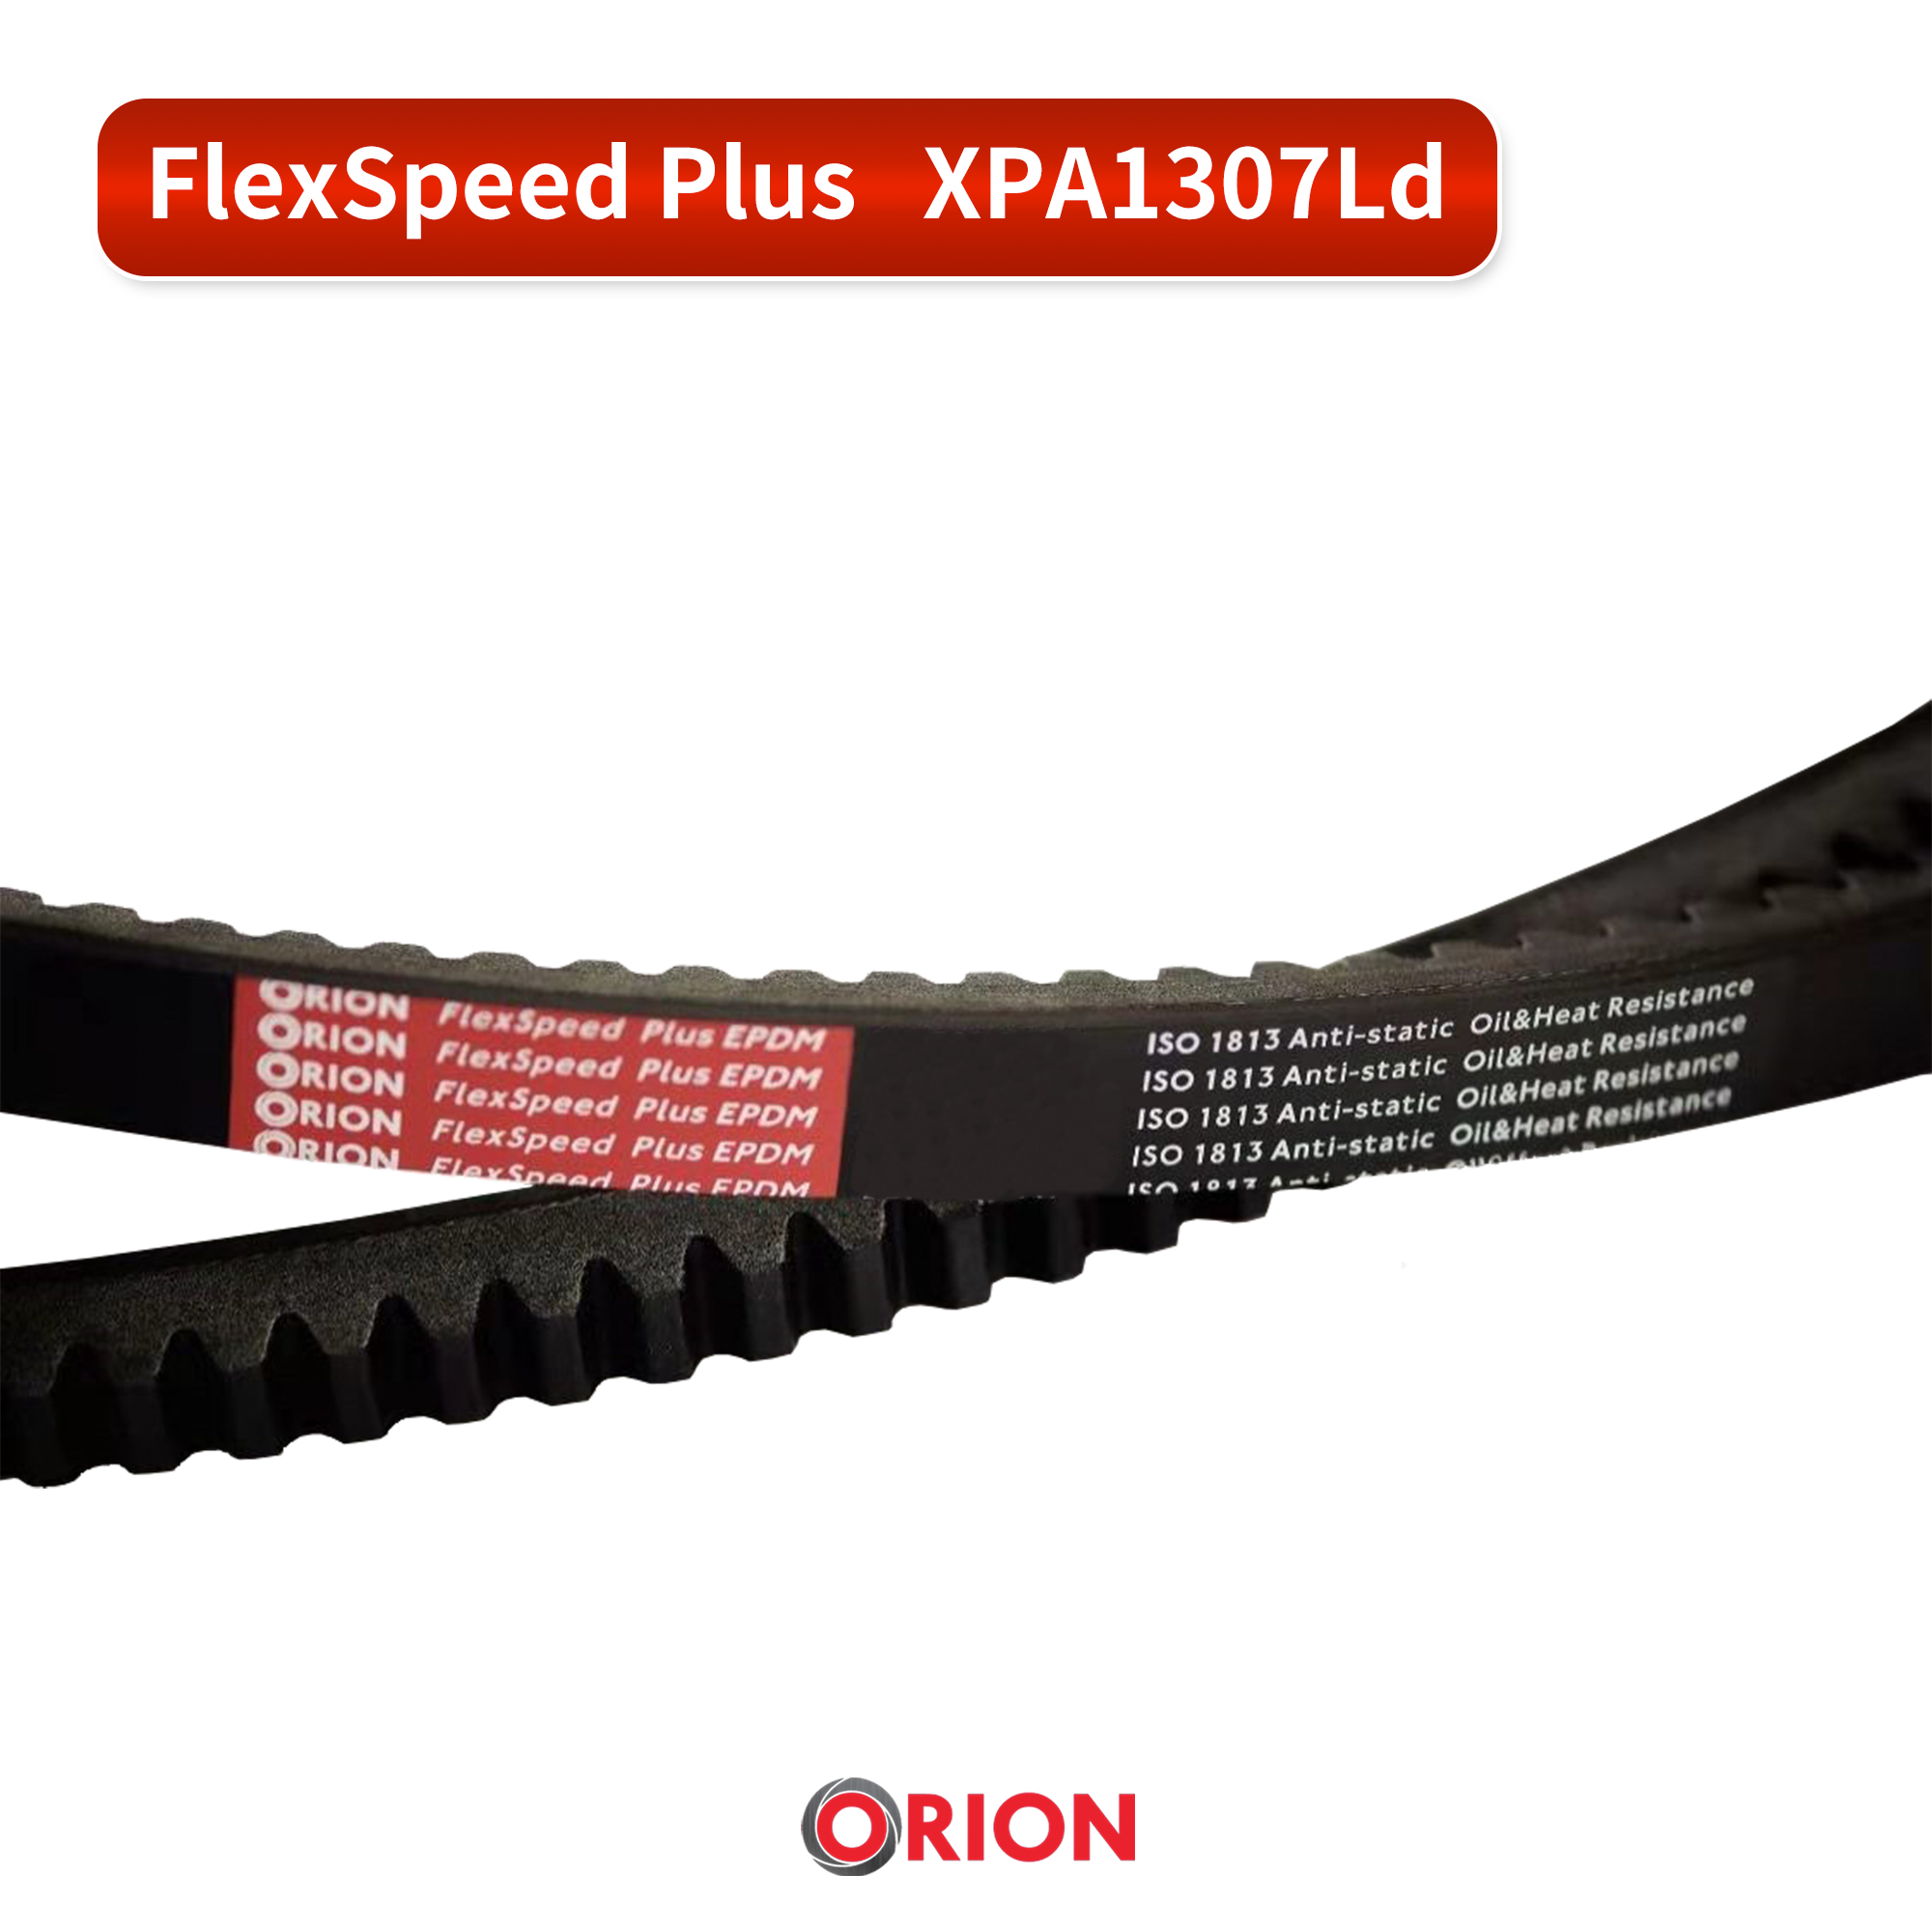 ORION FlexSpeed Plus XPA1307 Ld （红标）